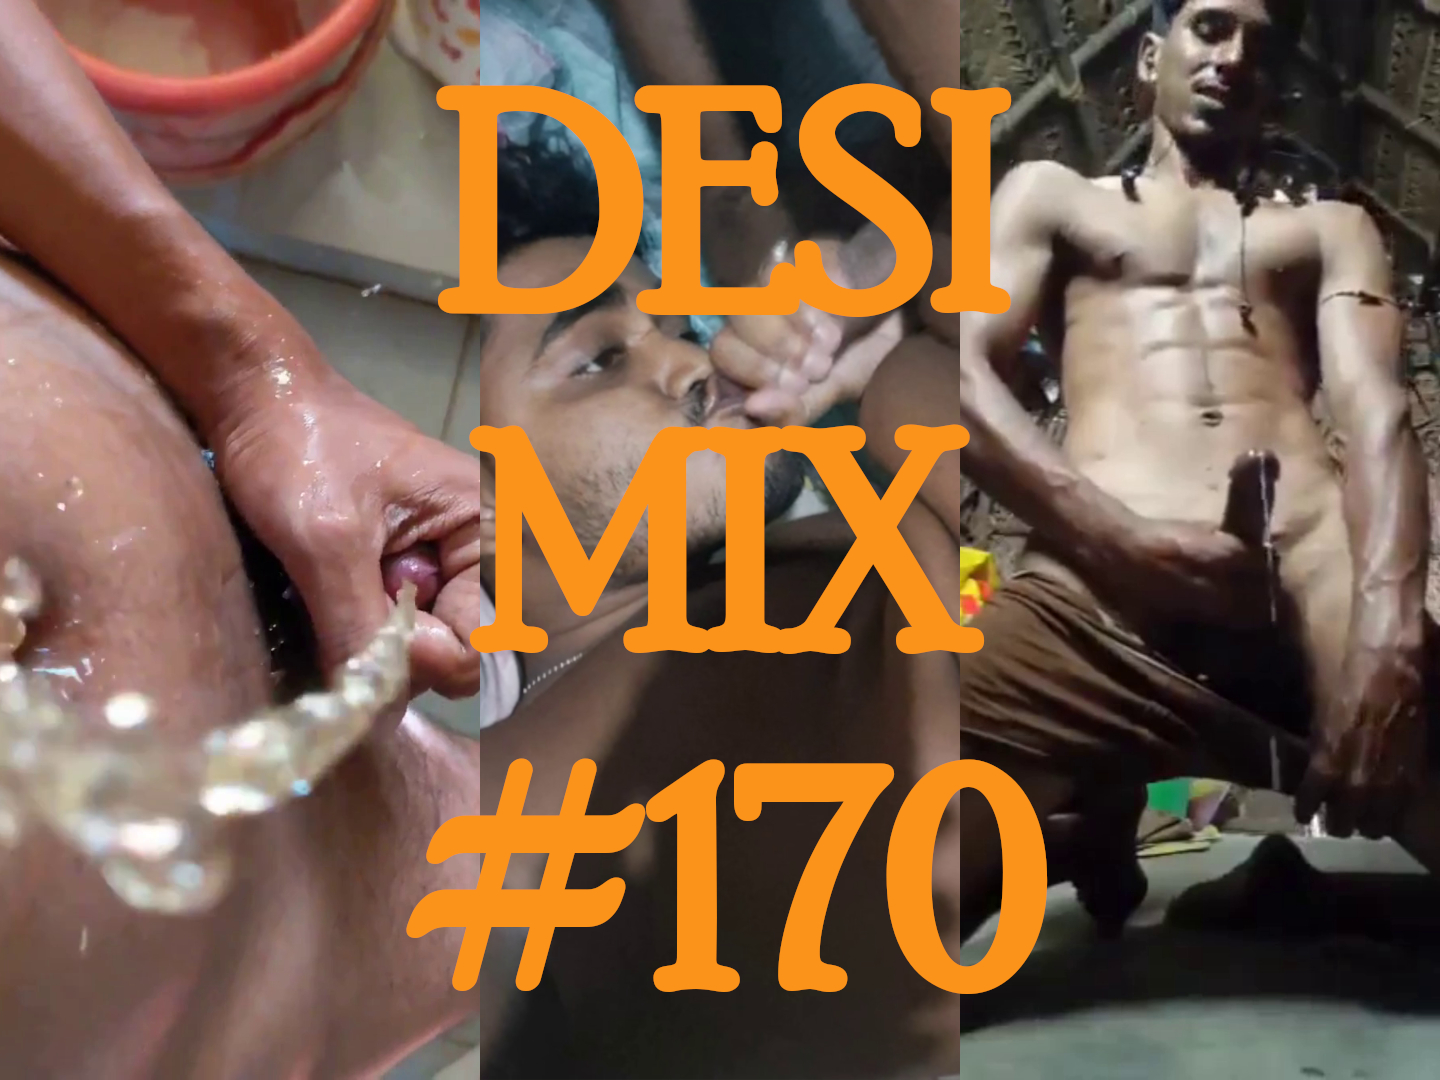 Desi Mix #170